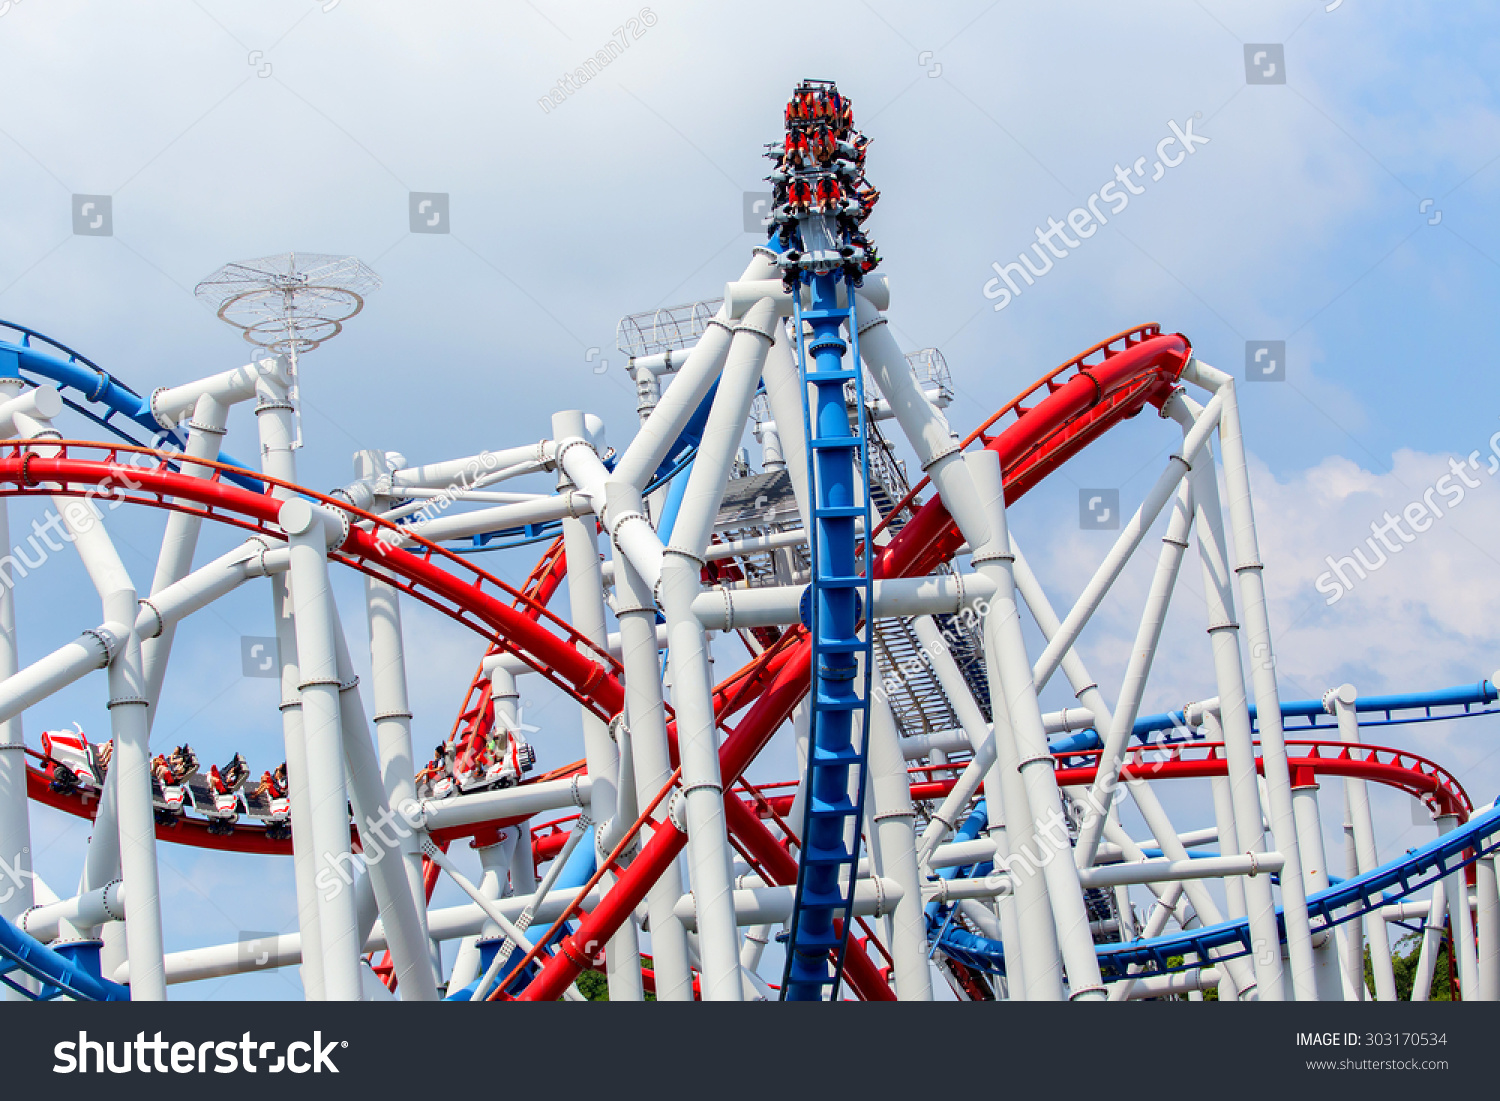 Stock Photo Singapore July Roller Coaster In Universal Studios Singapore At Singapore Resorts World 303170534 